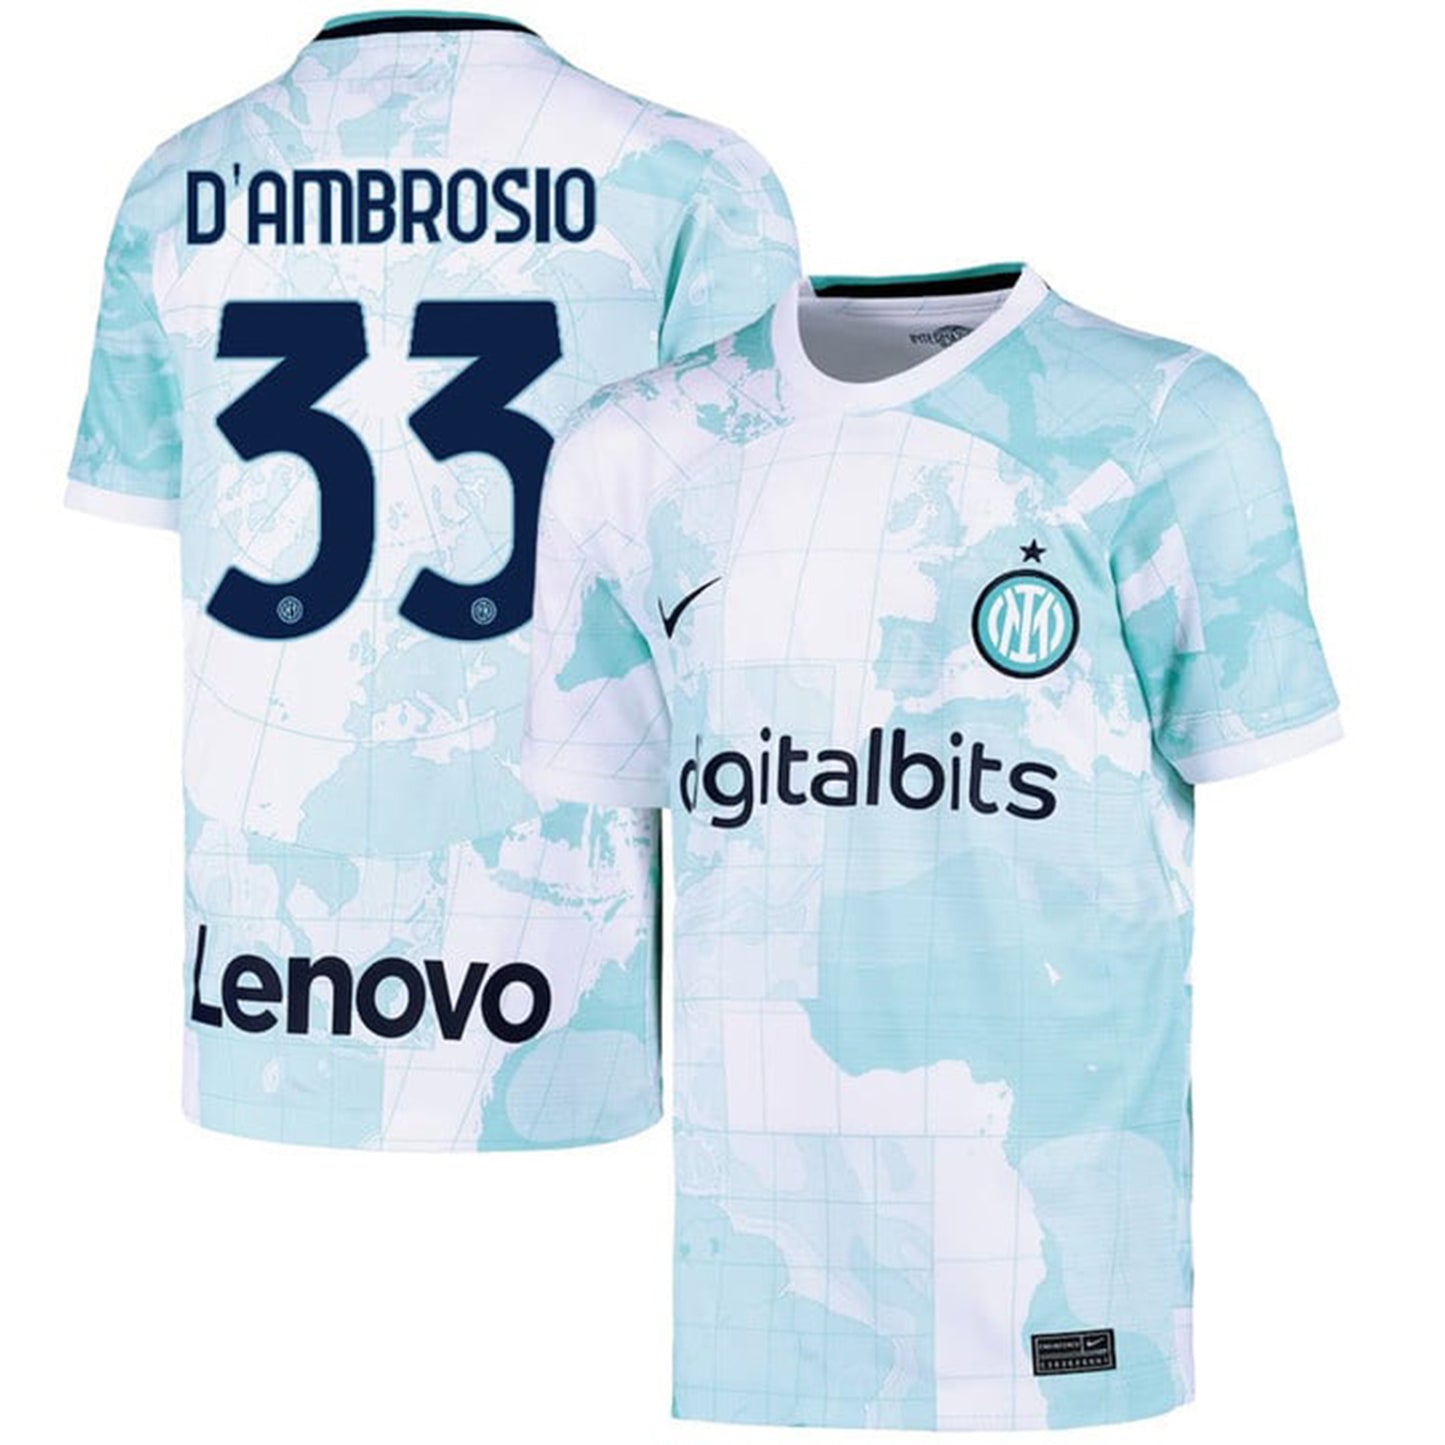 Danilo D'Ambrosio Inter Milan 33 Jersey